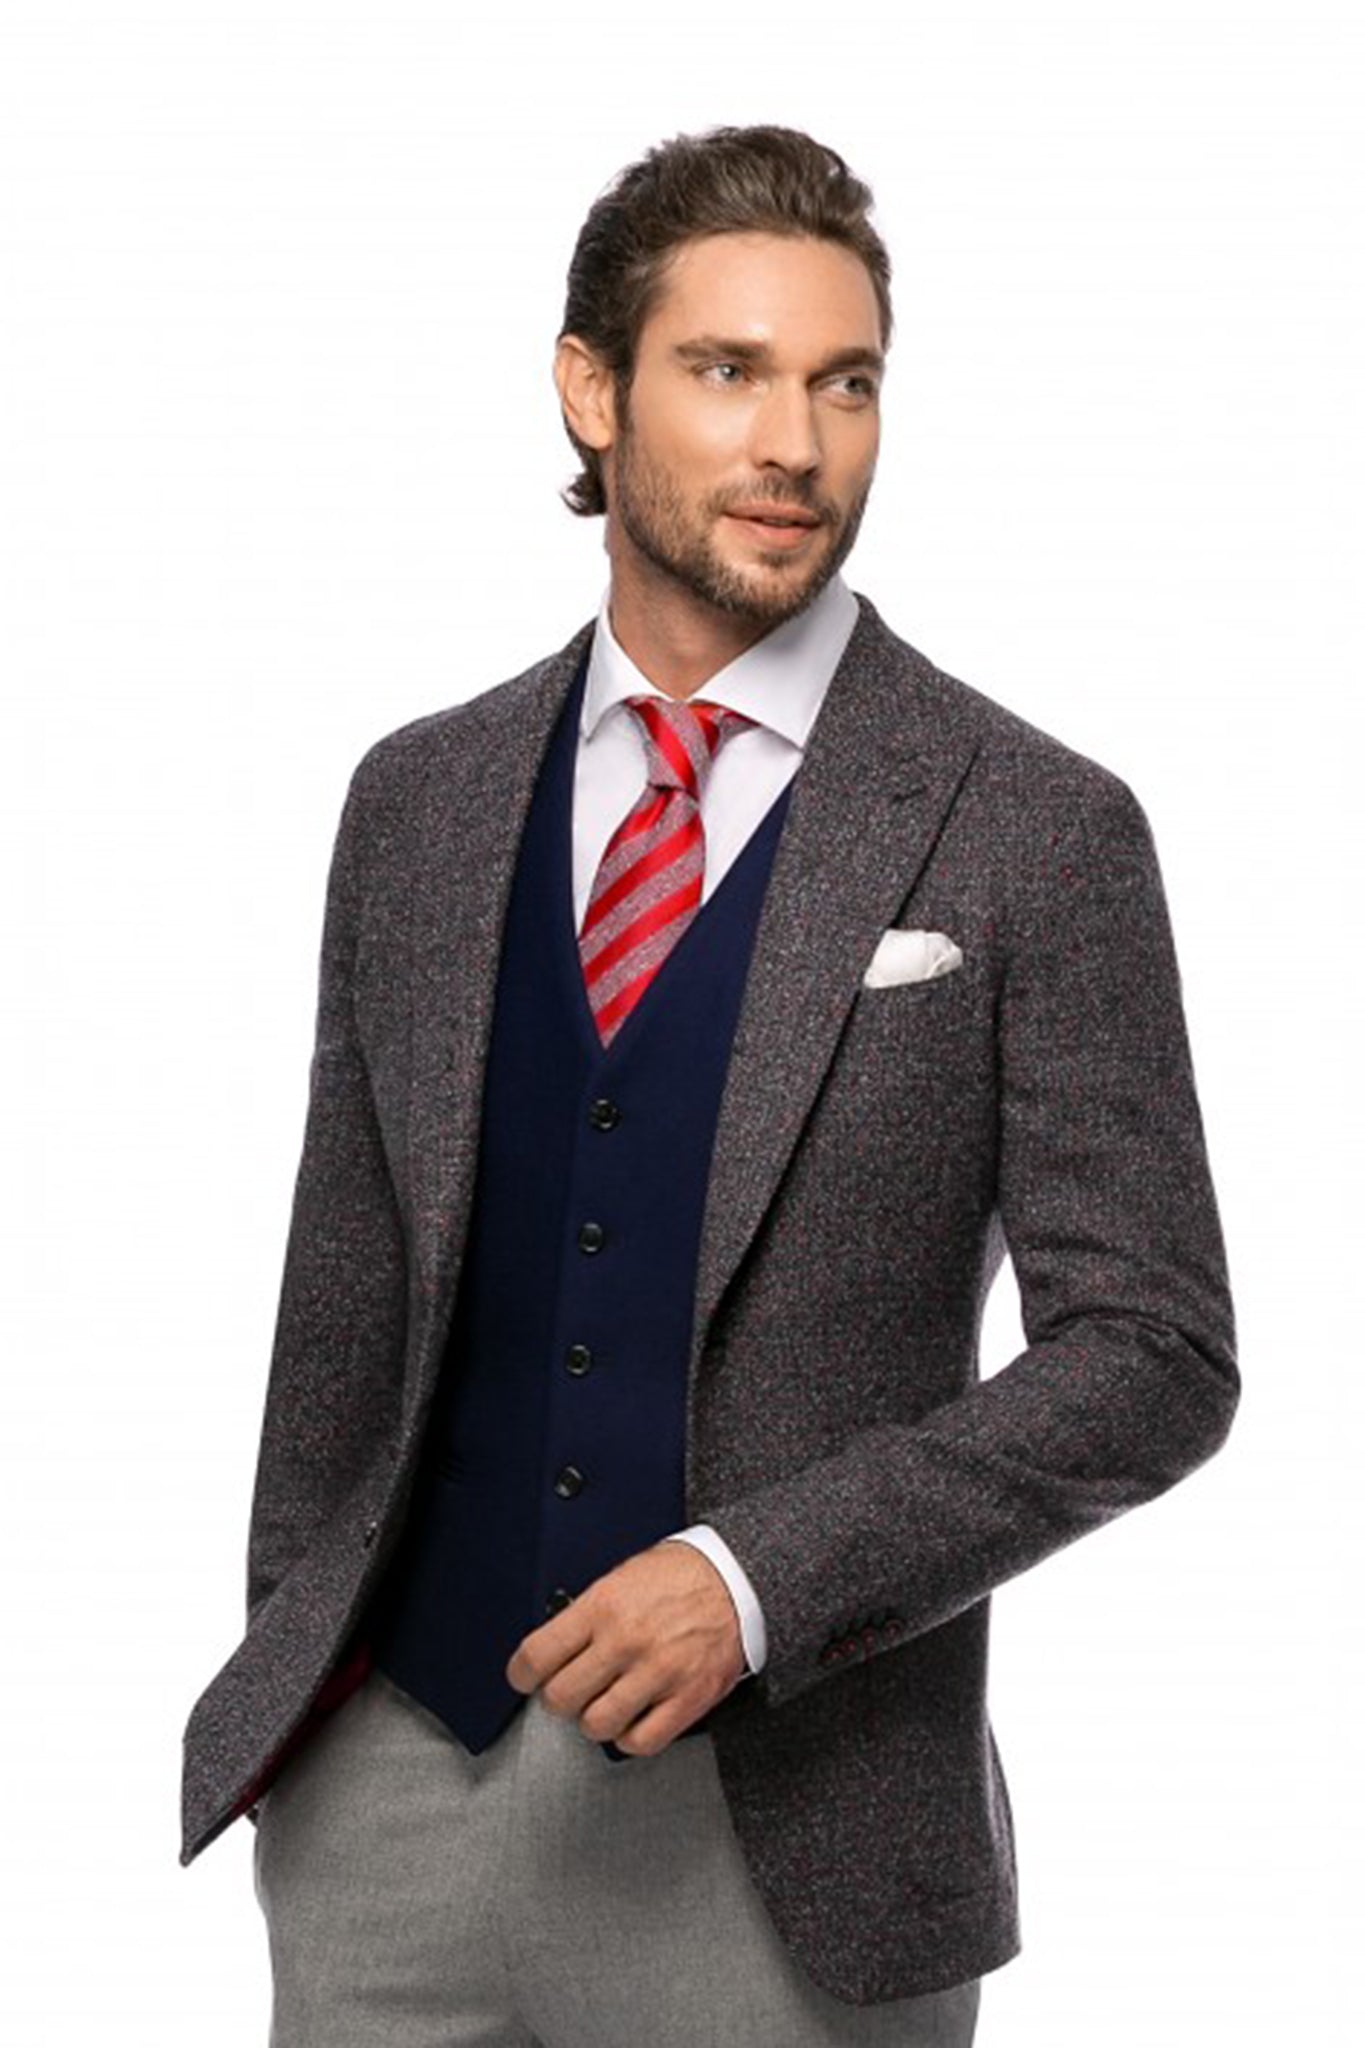 Textured gray jacket, slim fit